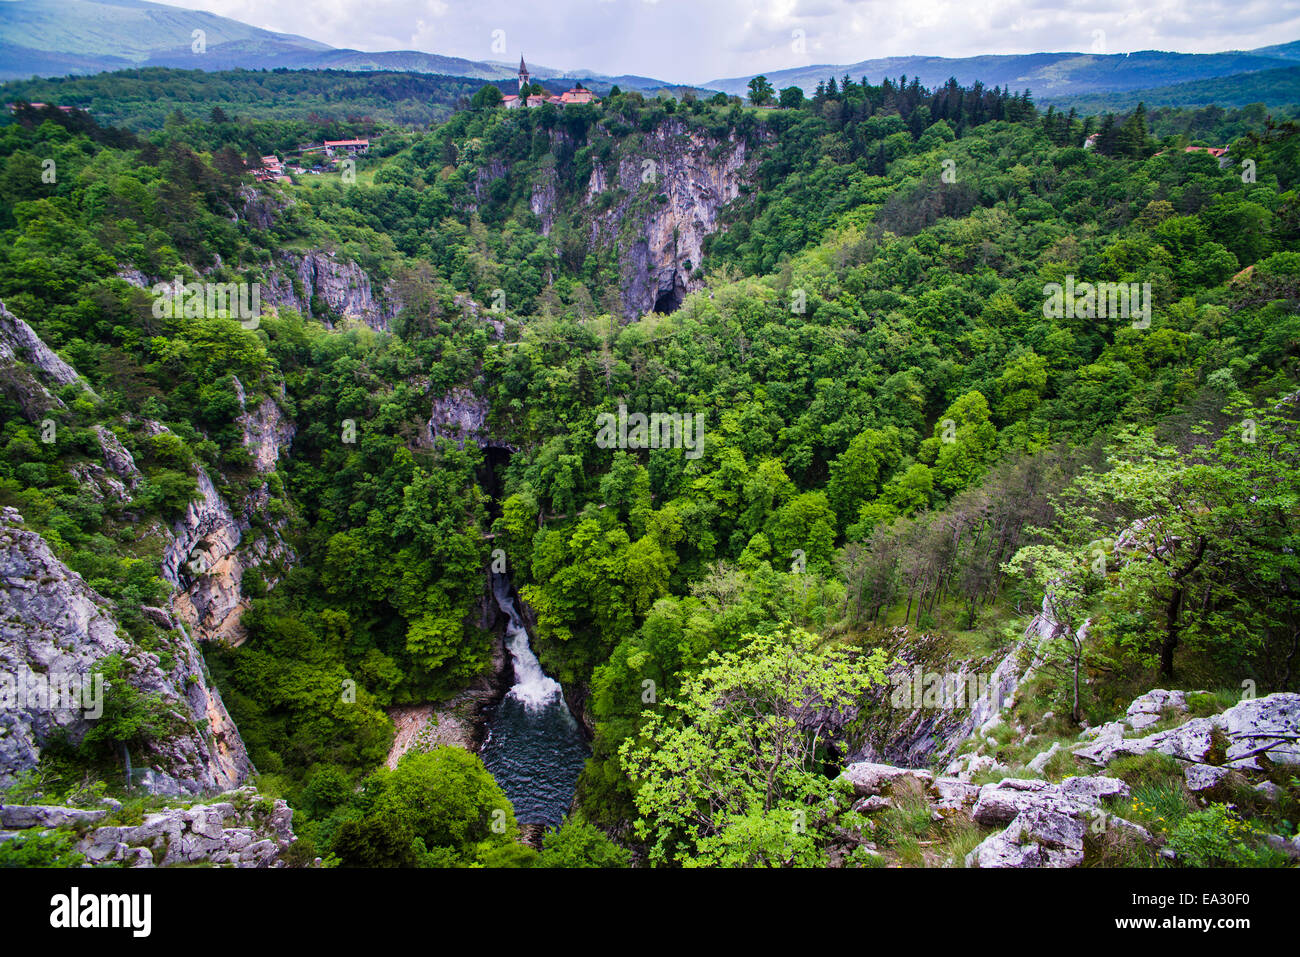 Velika Dolina (Big Valley), a town above the Skocjan Caves, in the Karst Region (Kras Region) of Slovenia, Europe Stock Photo